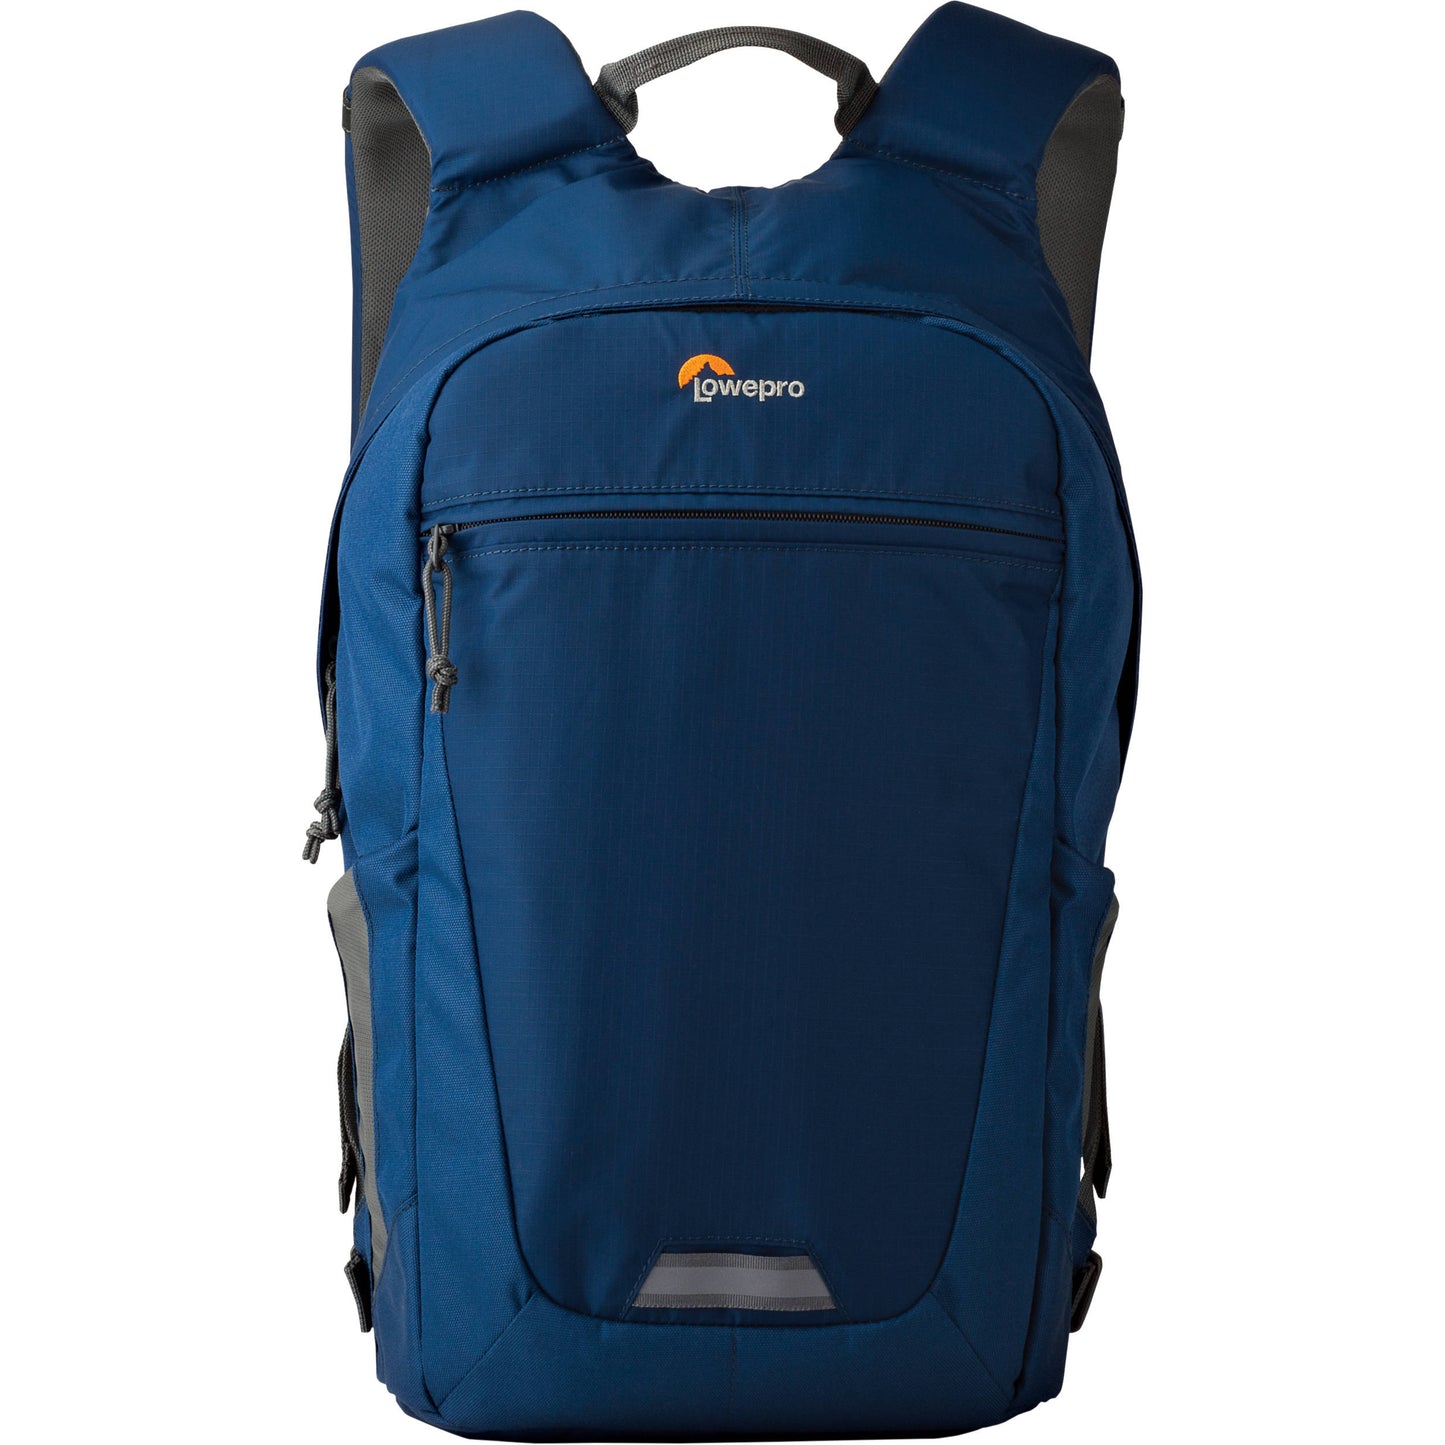 Lowepro Photo Hatchback Series BP 150 AW II Backpack Bag (Midnight Blue/Gray)